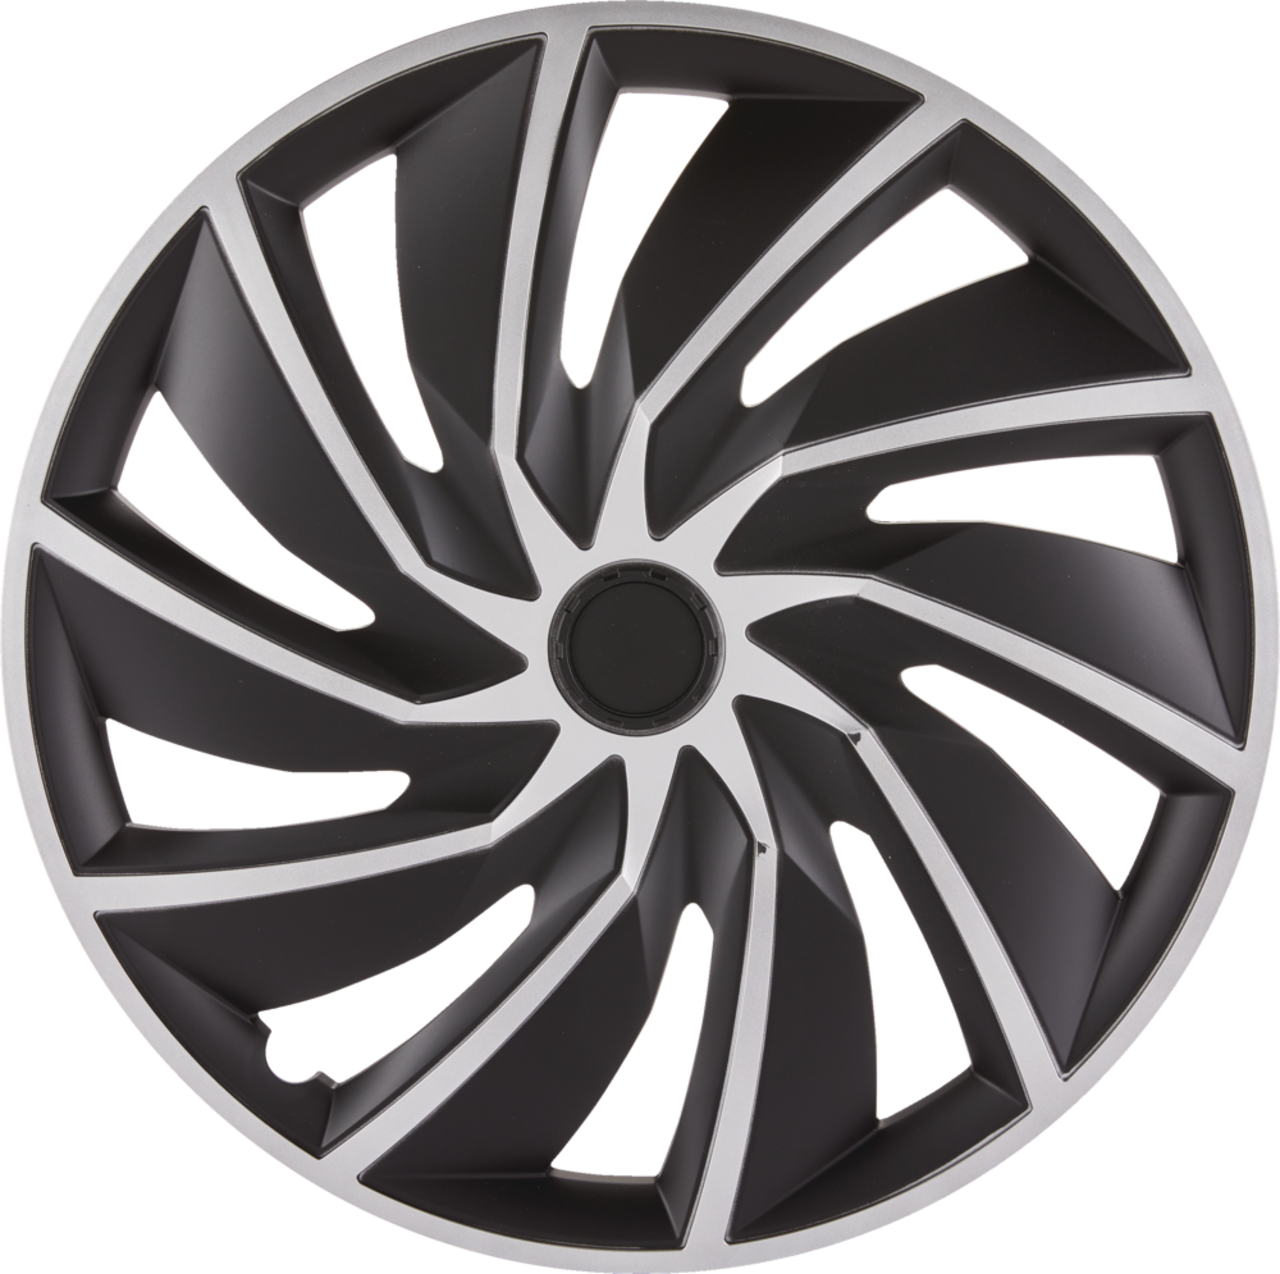 AutoTrends Wheel Cover, 1021, Gunmetal, 17-in, 4-pk